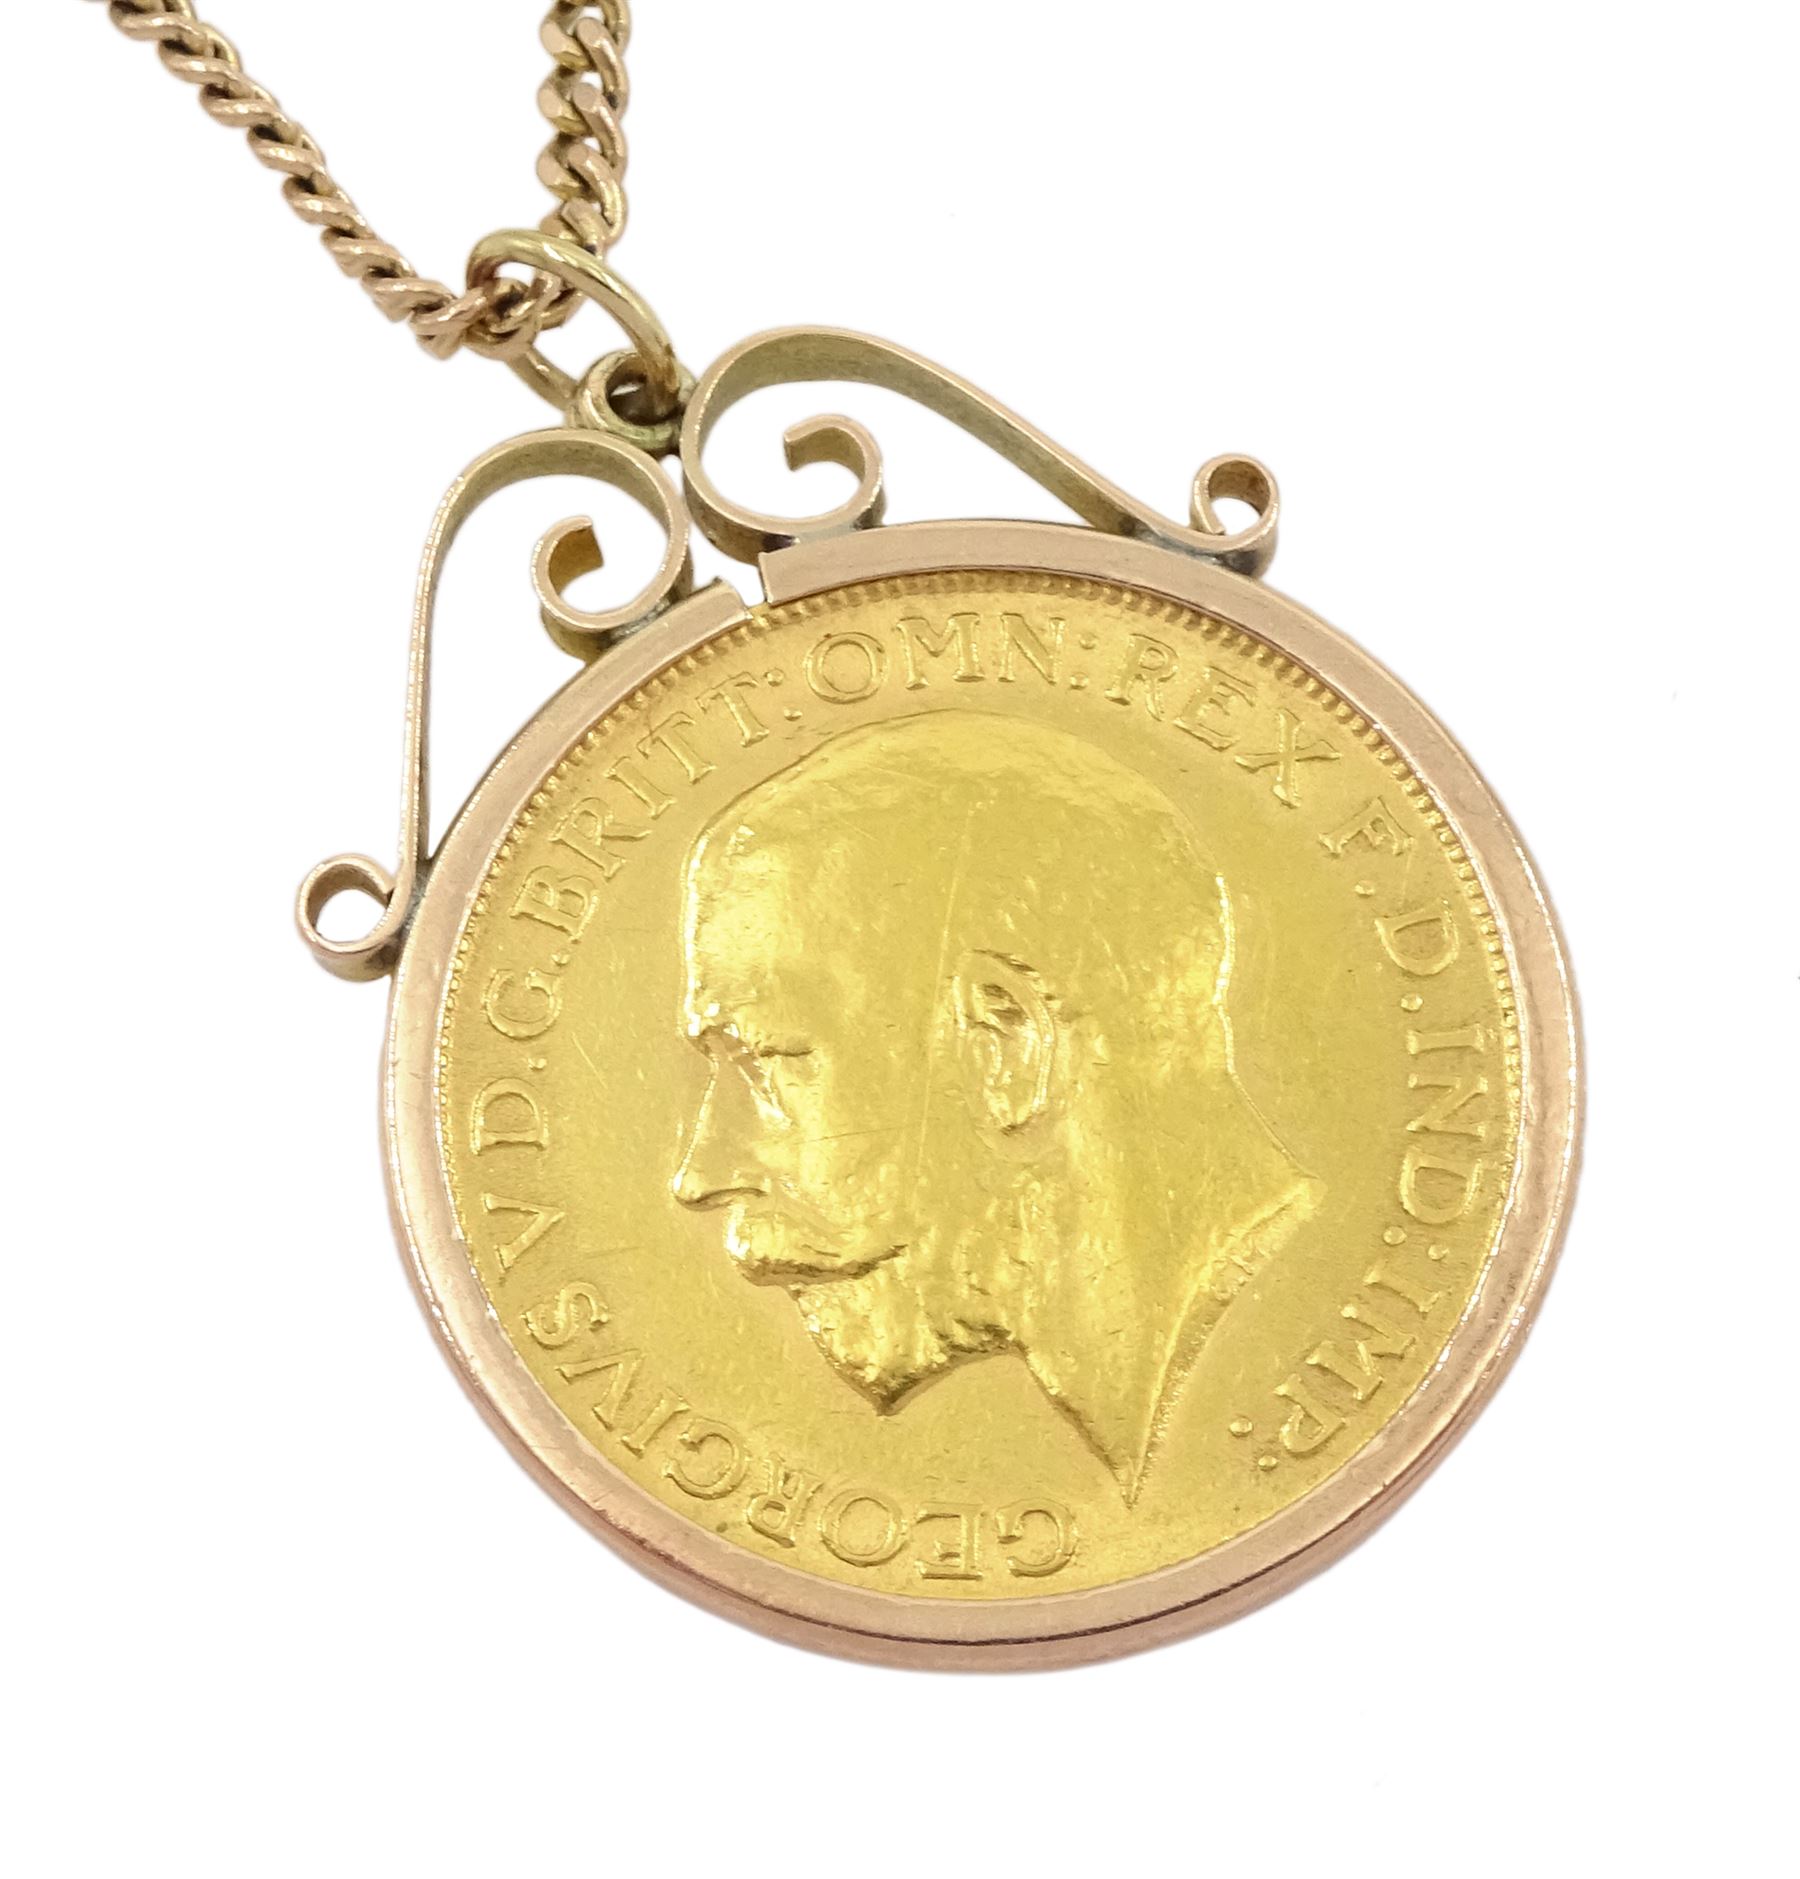 King George V 1911 gold full sovereign coin - Image 3 of 4